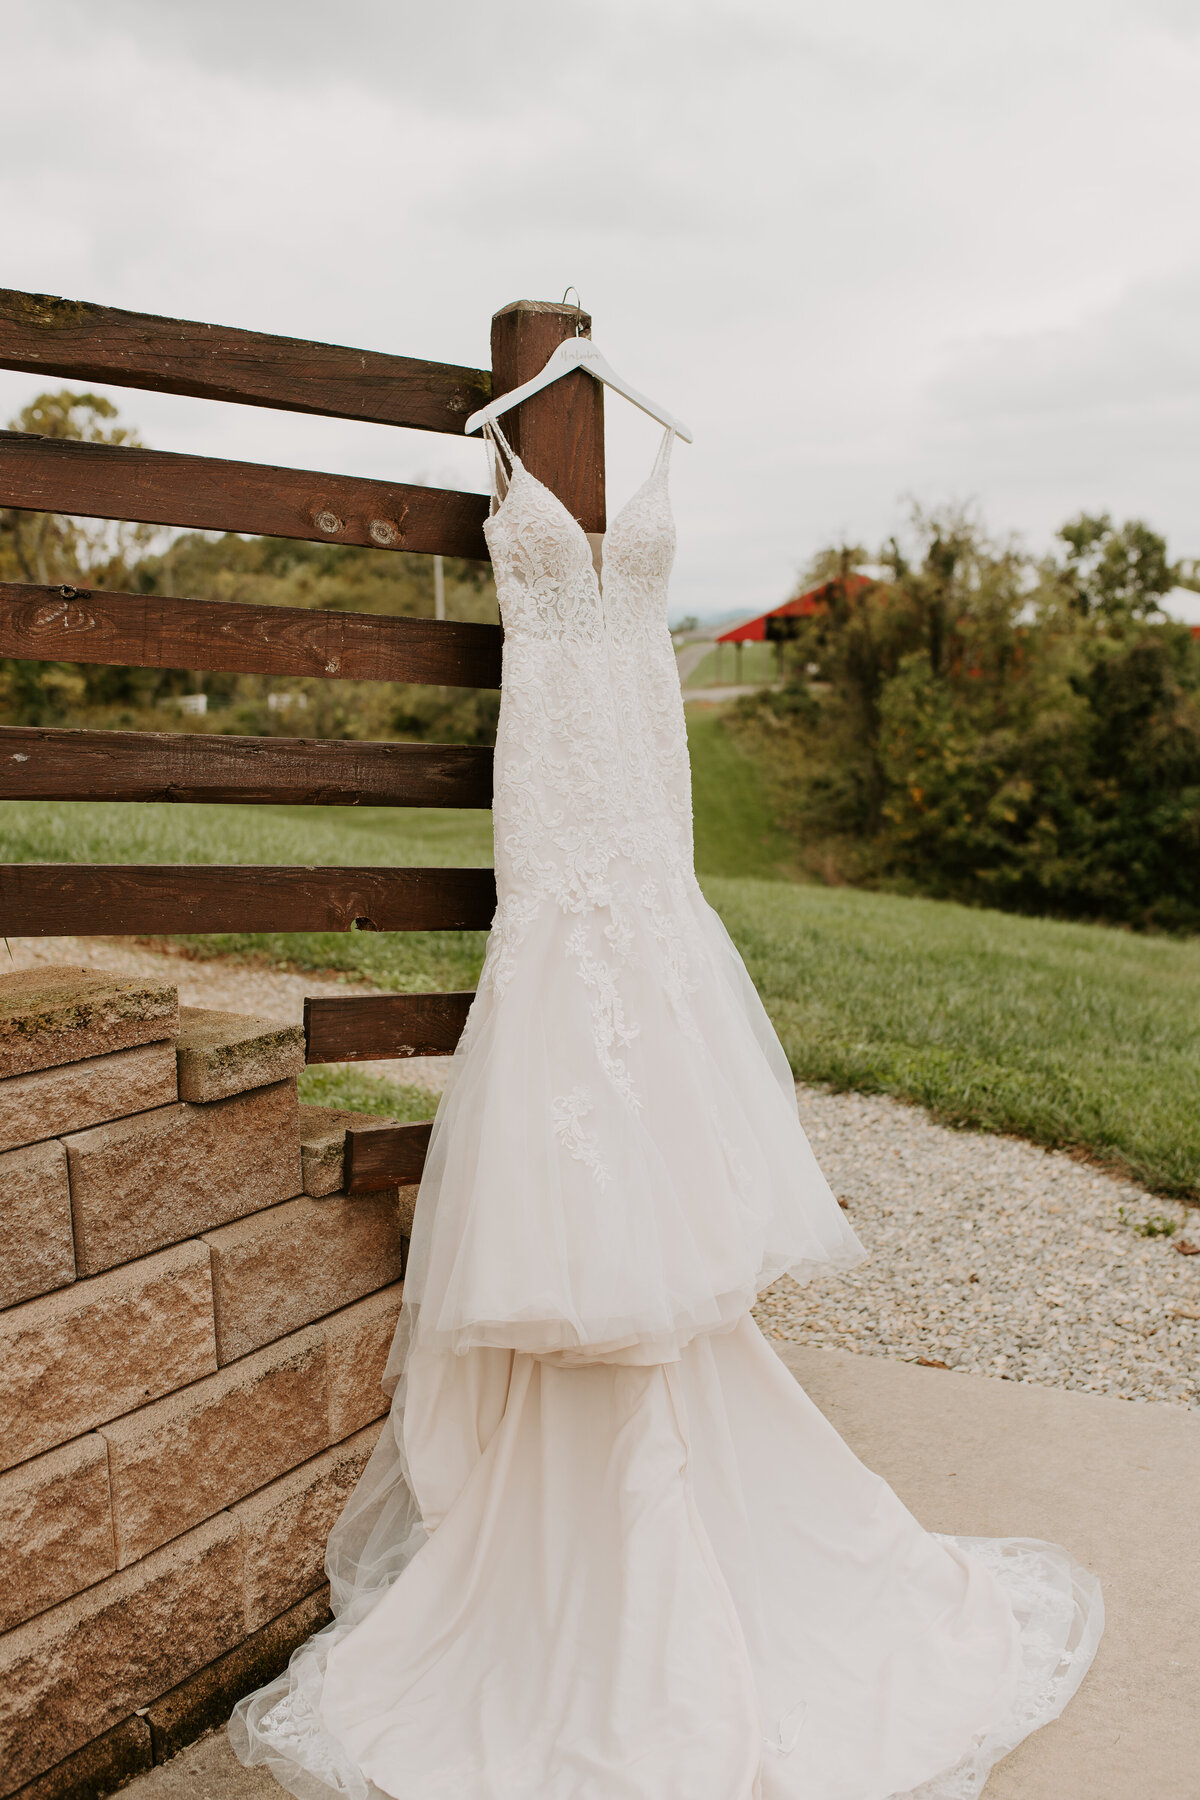 Wedding dress inspiration in a rustic barn backdrop. Miss Stella York gown #6793